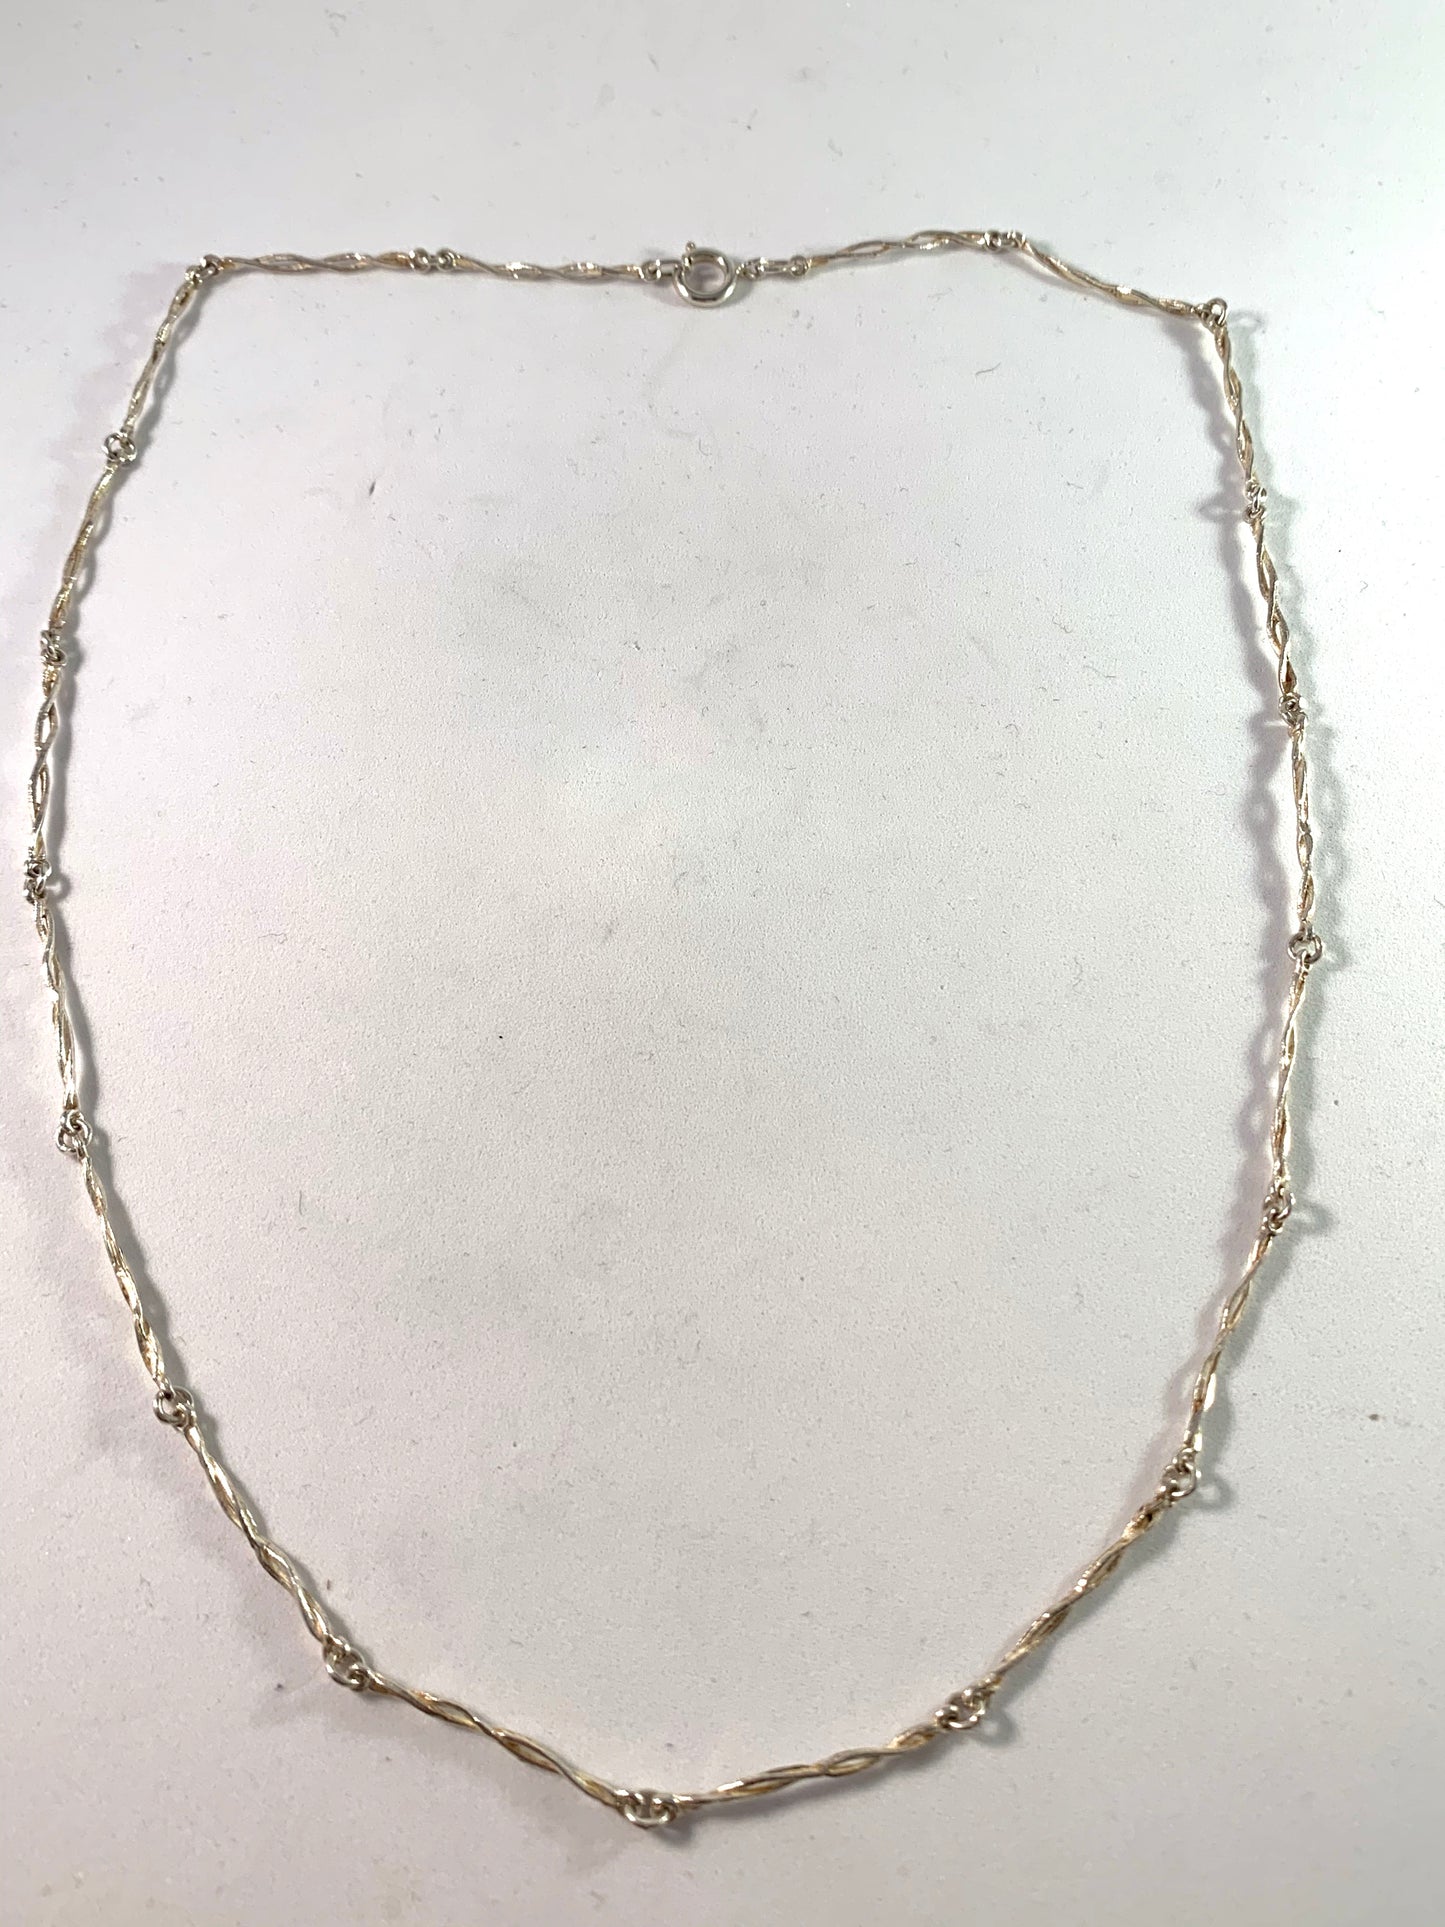 Salovaara, Finland Vintage Sterling Silver Necklace.